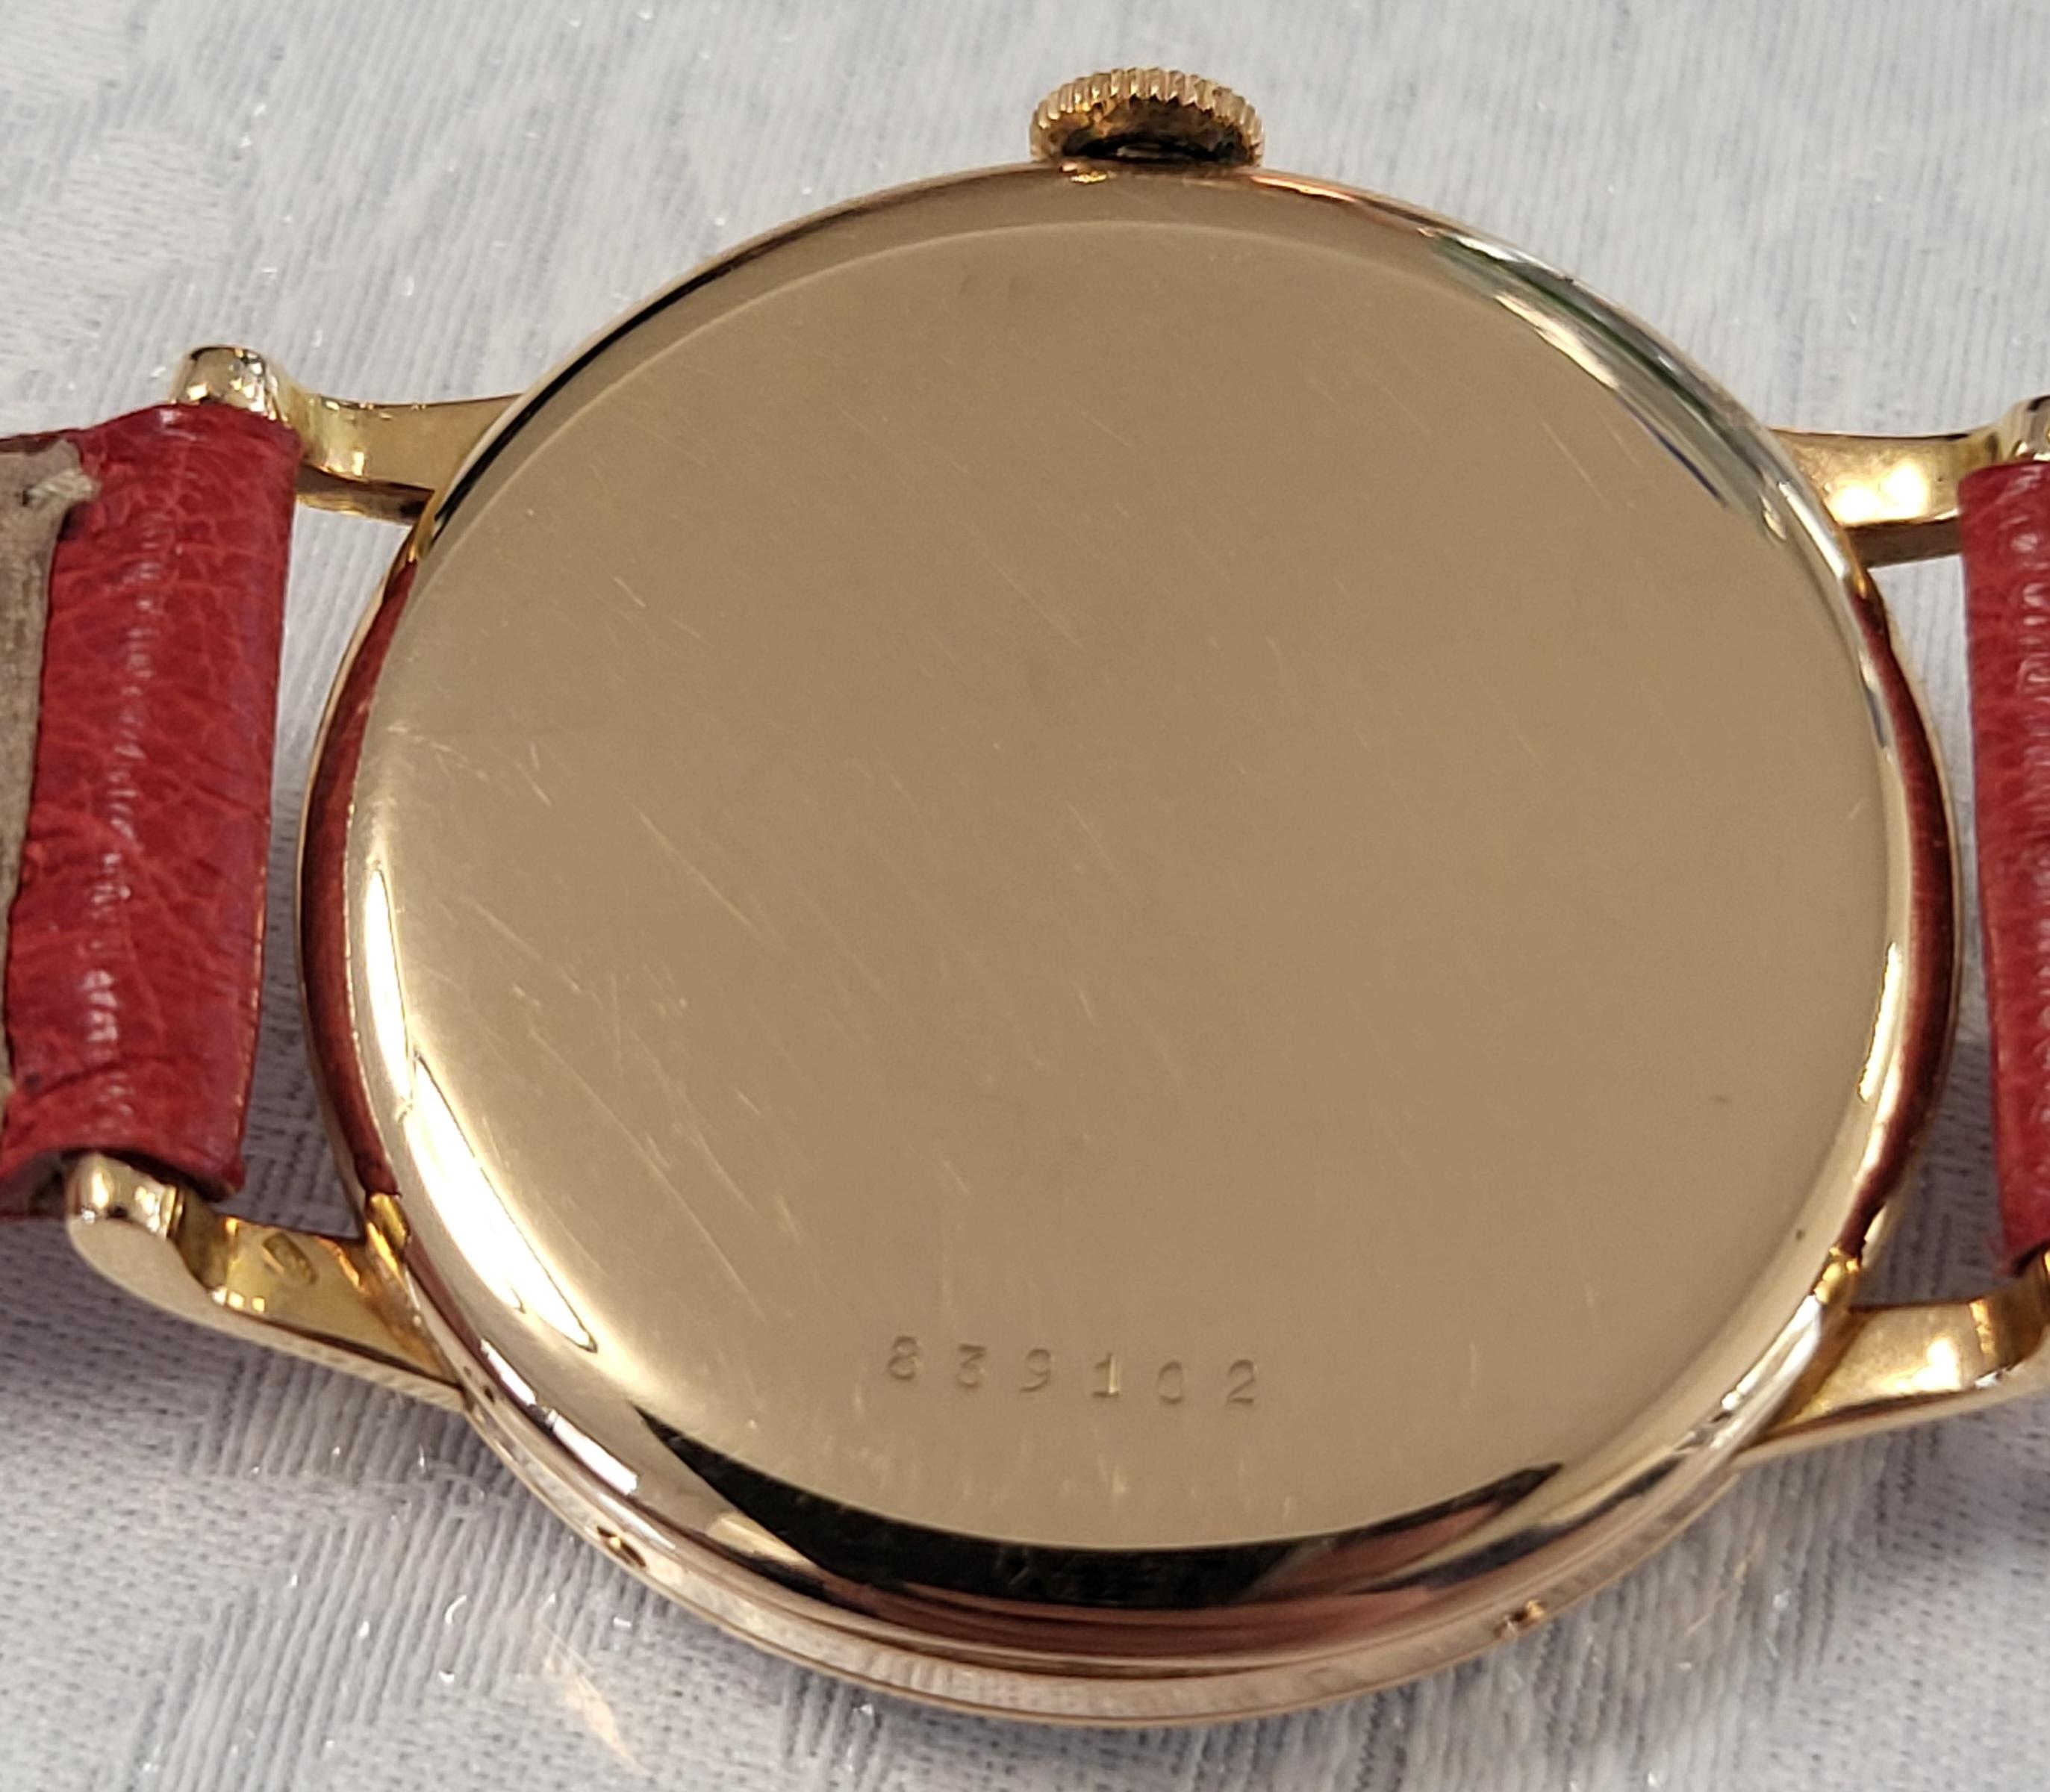 Doxa Triple Calendar Moon Phase Wrist Watch, 18kt Yellow Gold Case Anti Magnetic For Sale 5